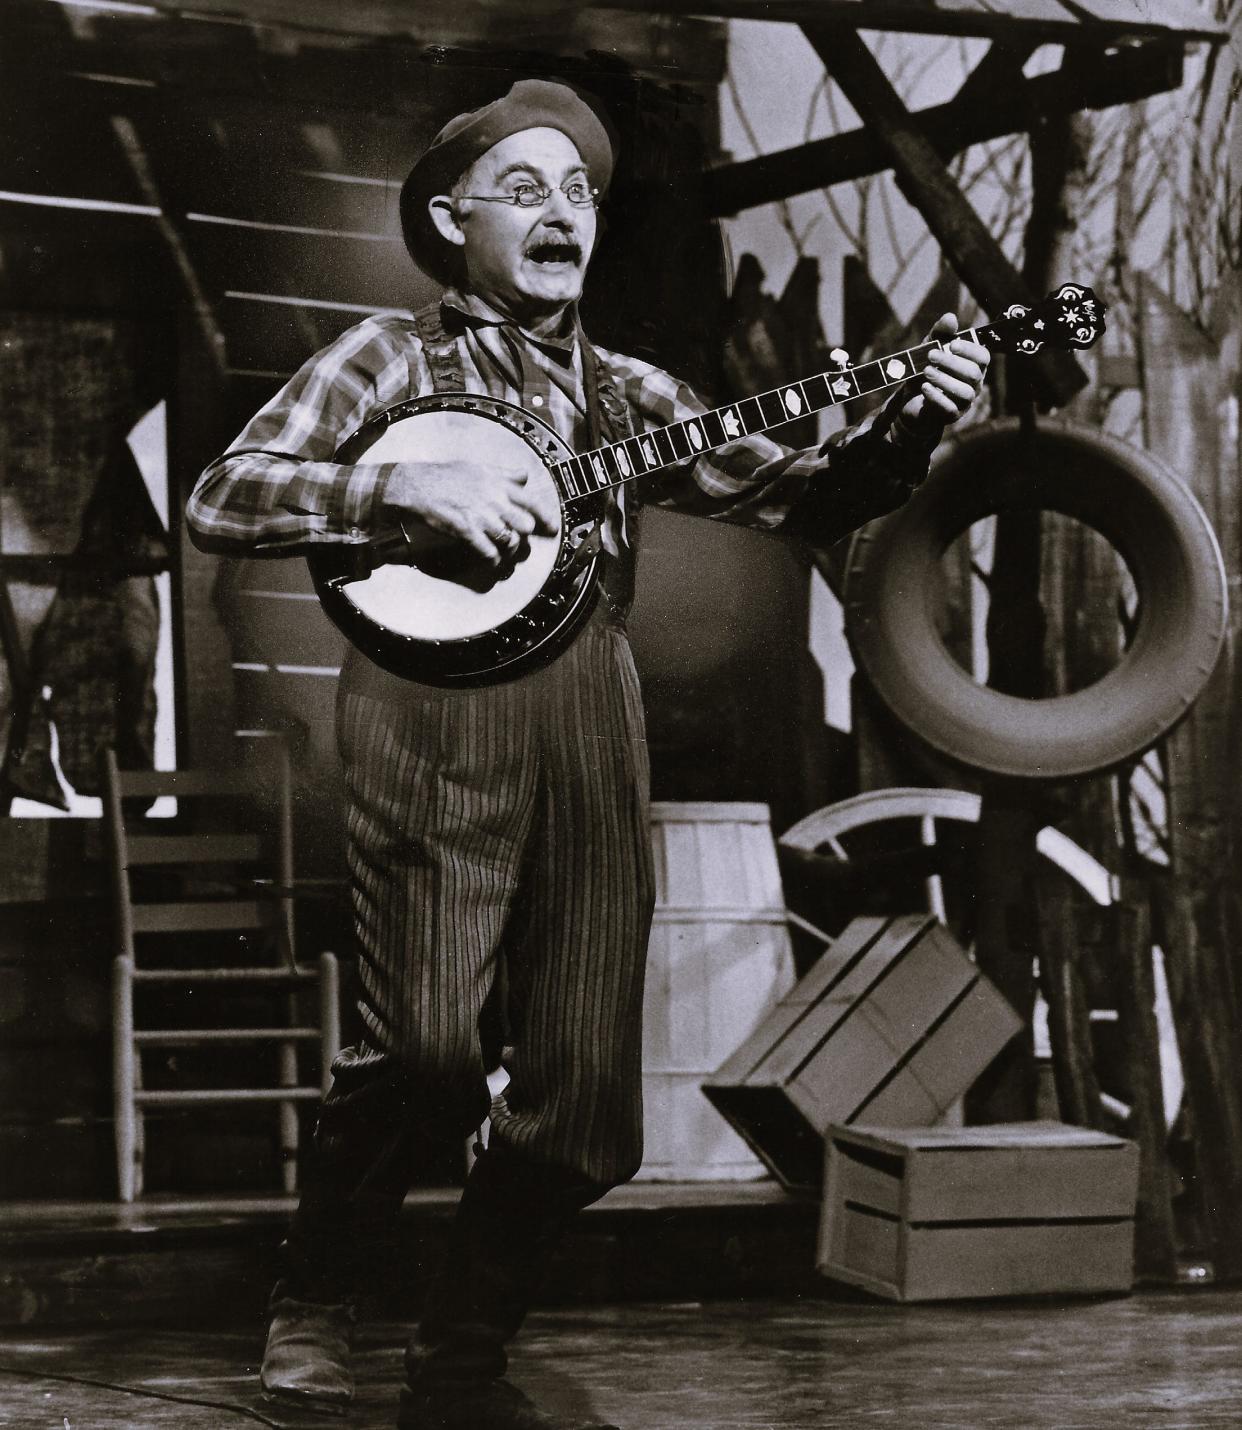 “Hee Haw” star Grandpa Jones, a former radio personality in Akron, plays the banjo in 1973.